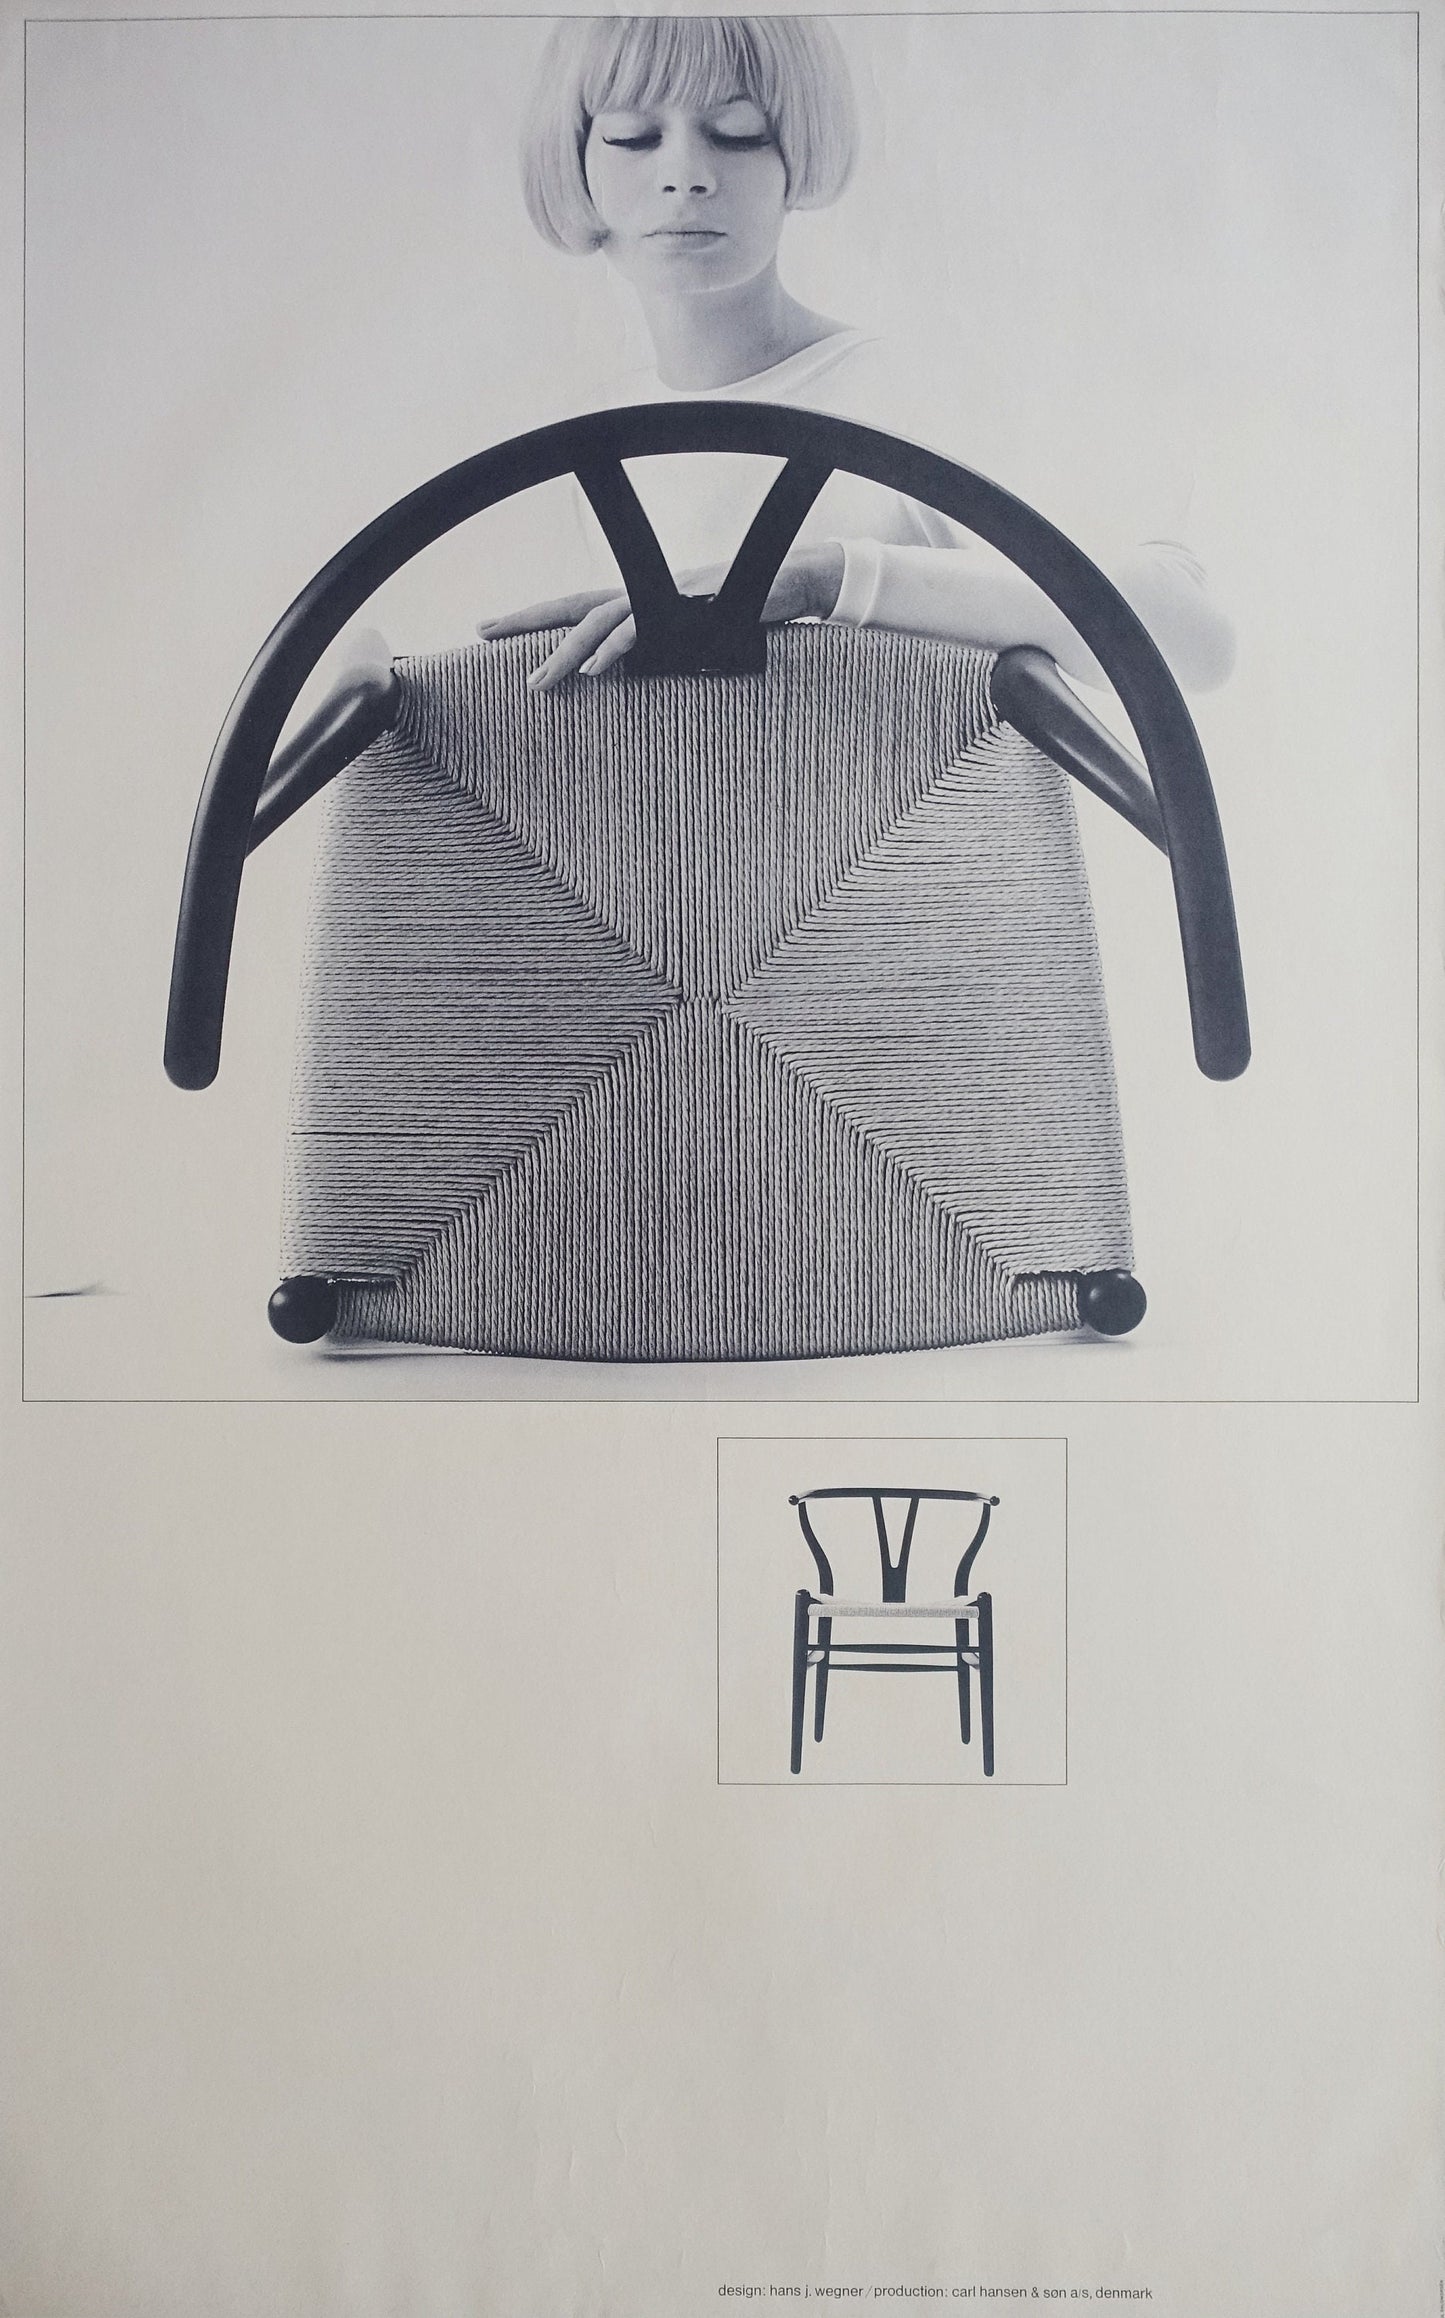 1960s Wegner's Wishbone Chair - Original Vintage Poster